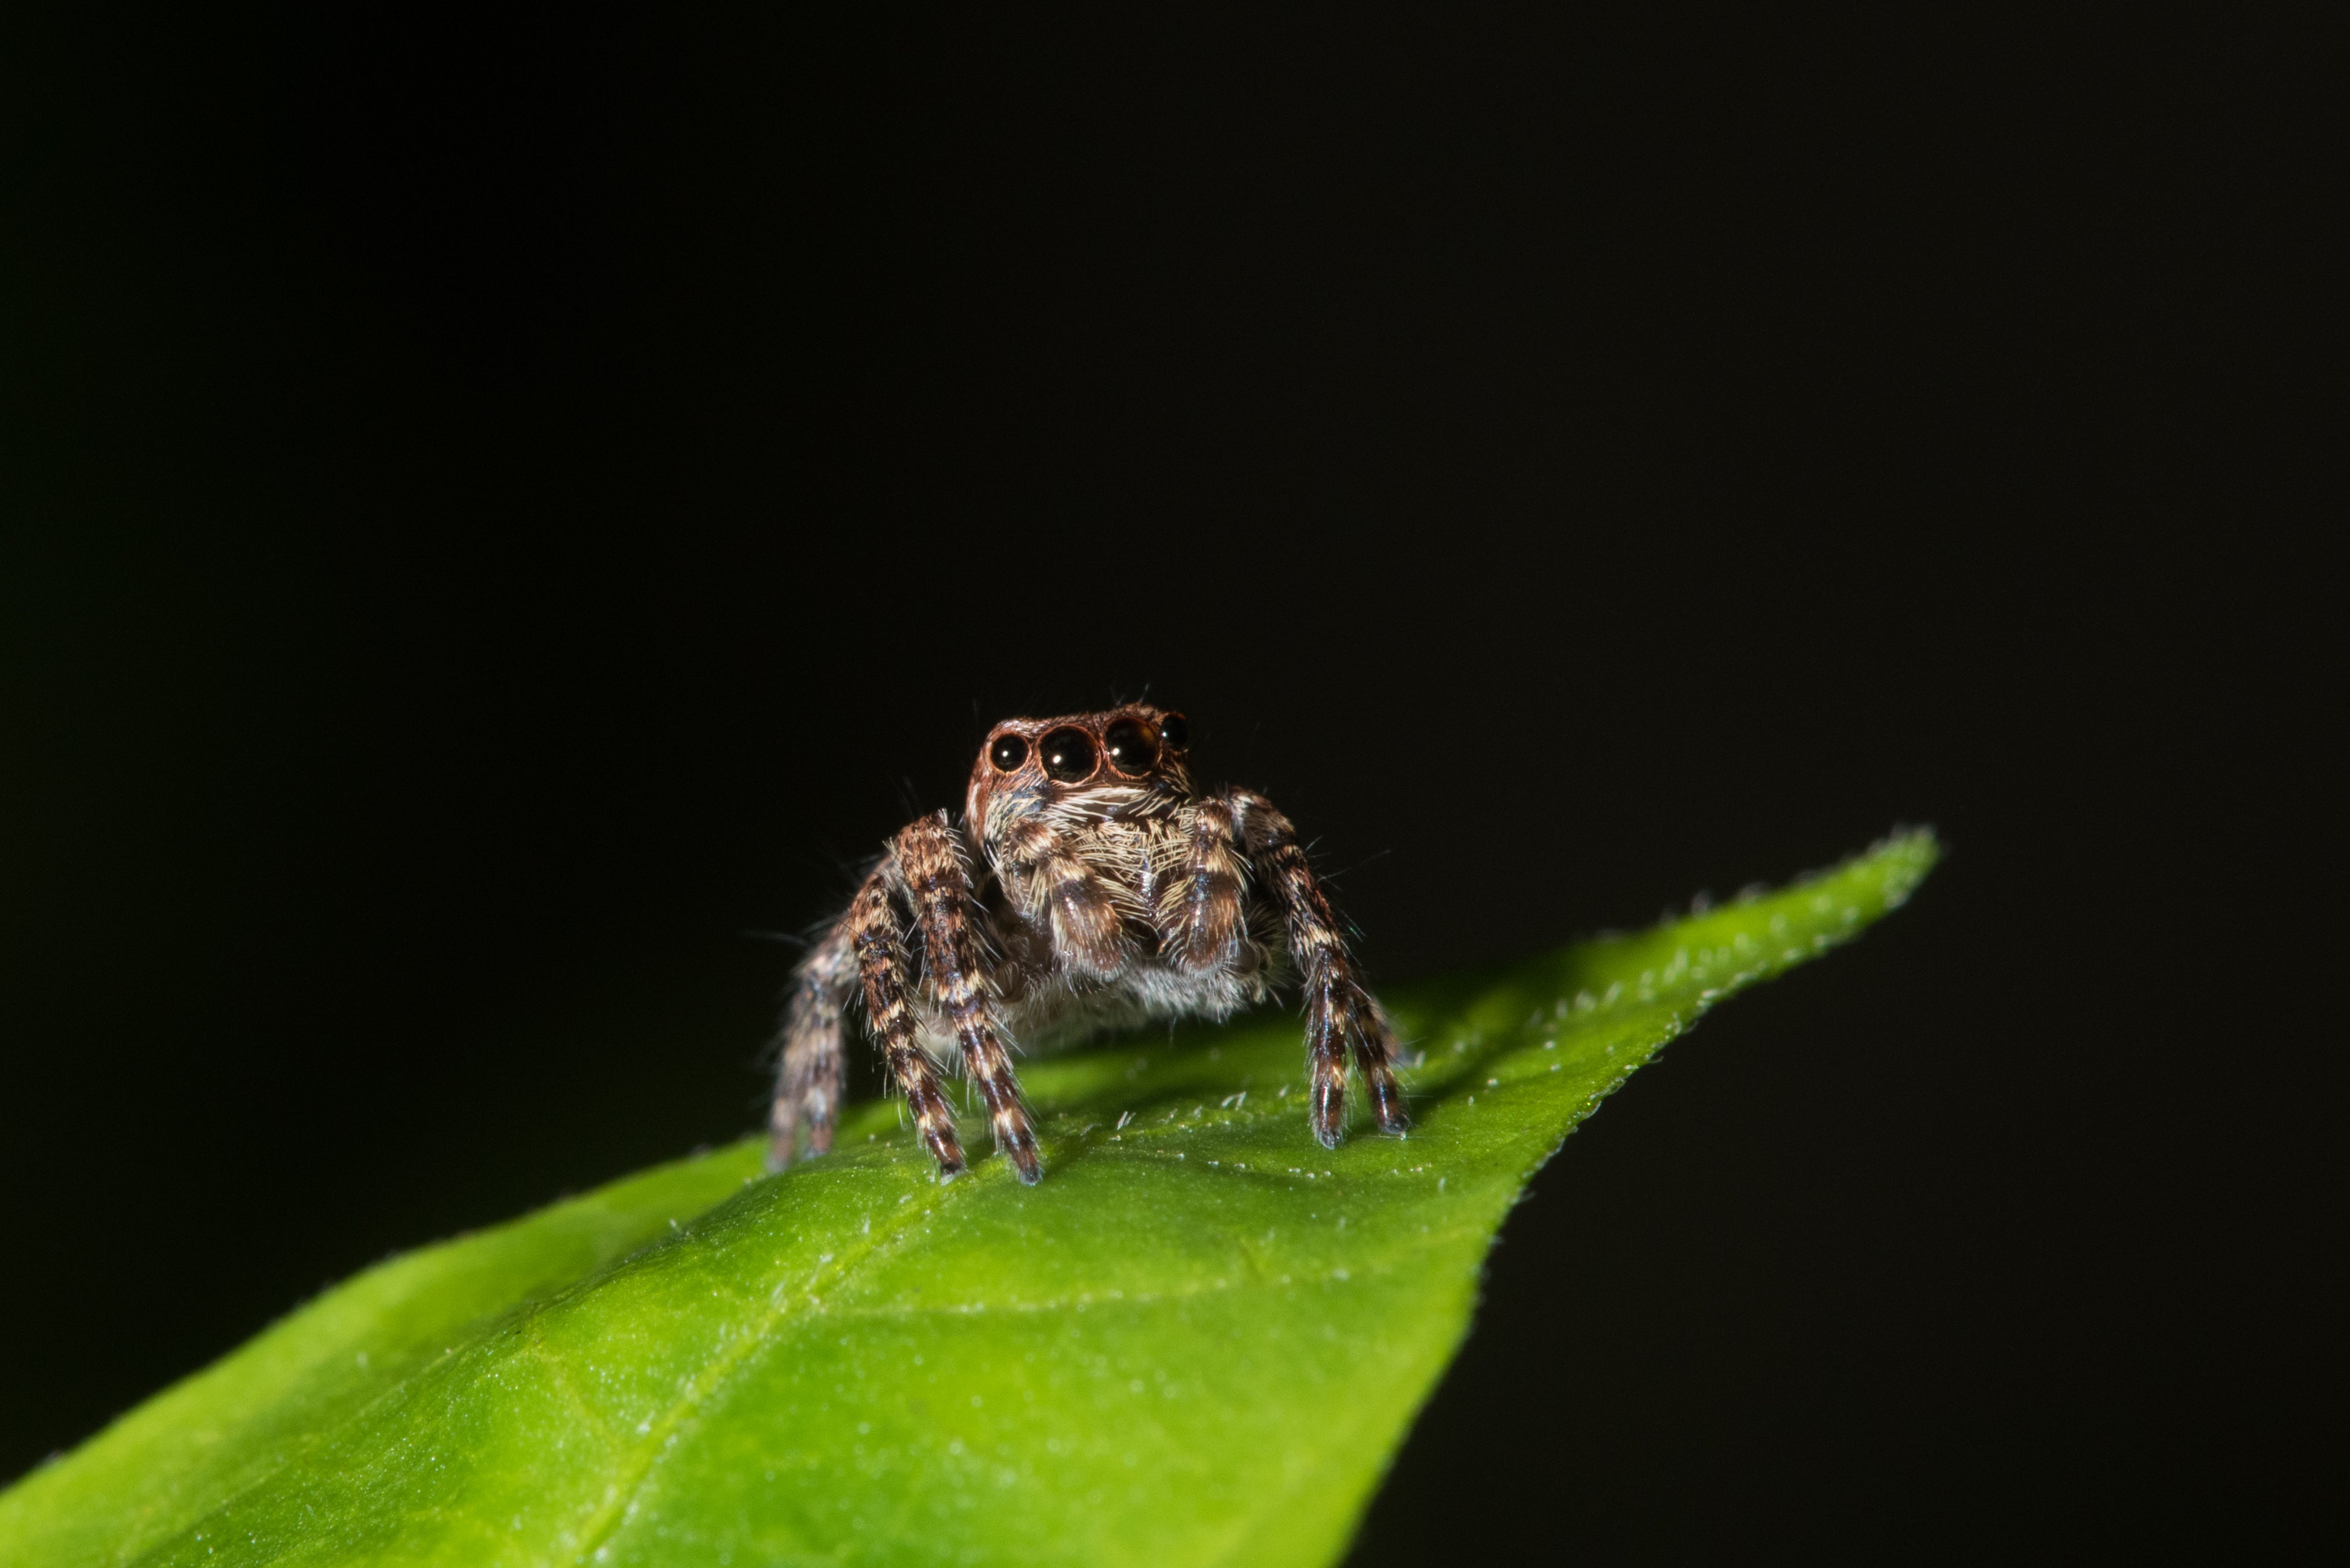 A jumping spider found in a photographer’s garden in Australia